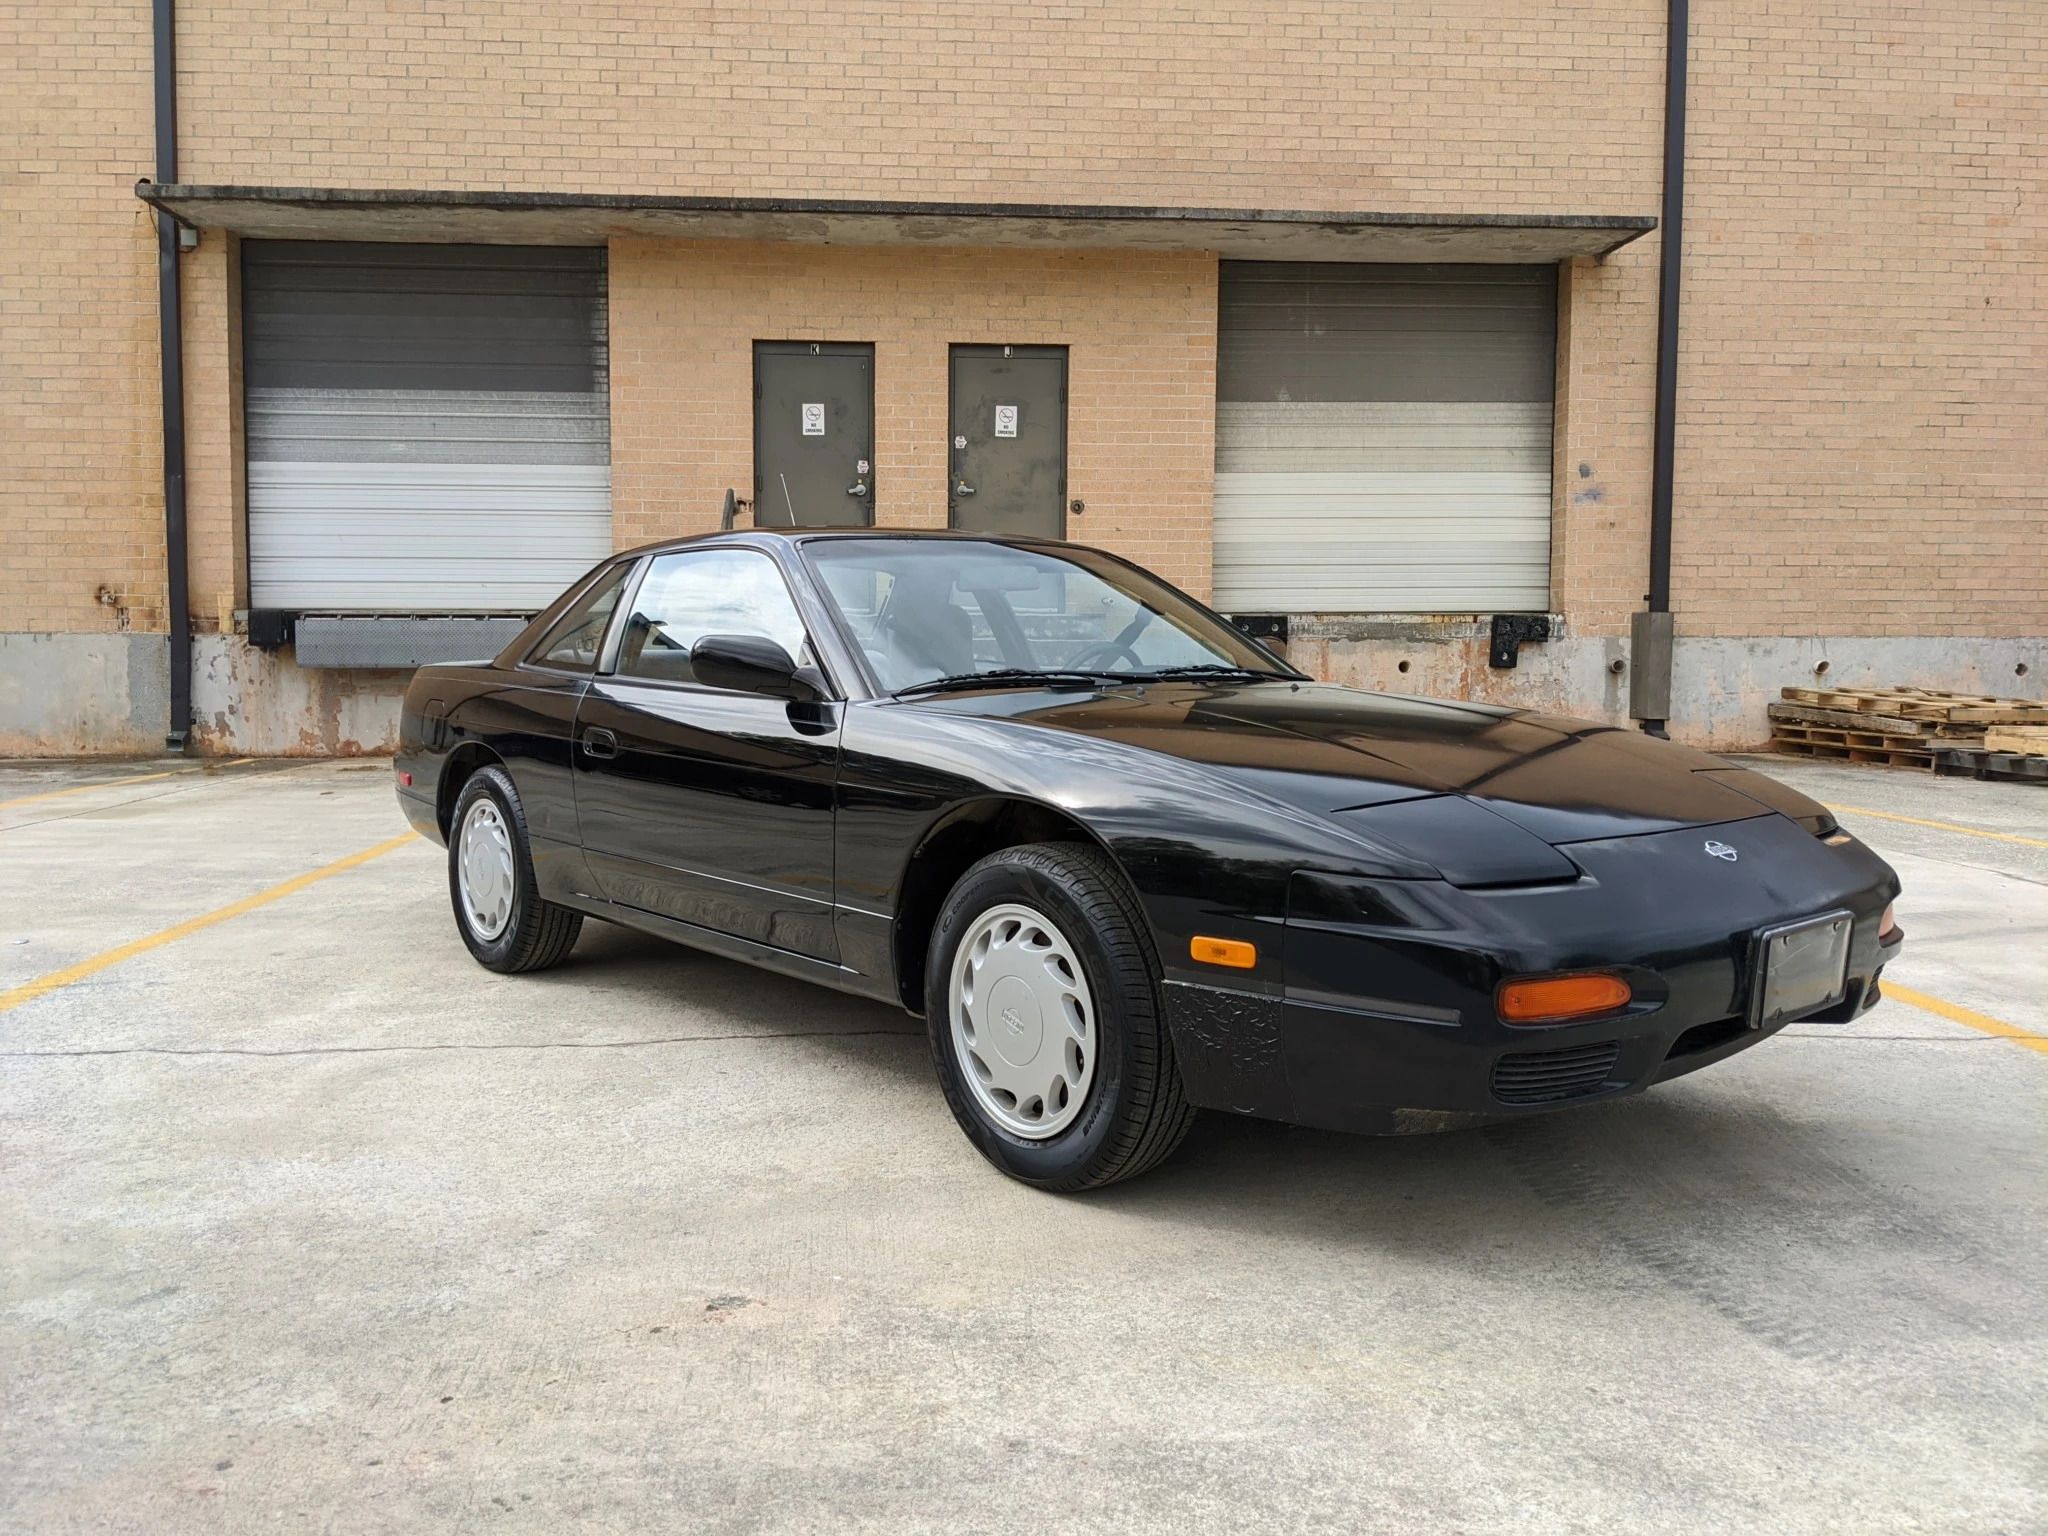 Black 1993 Nissan 240SX Parked